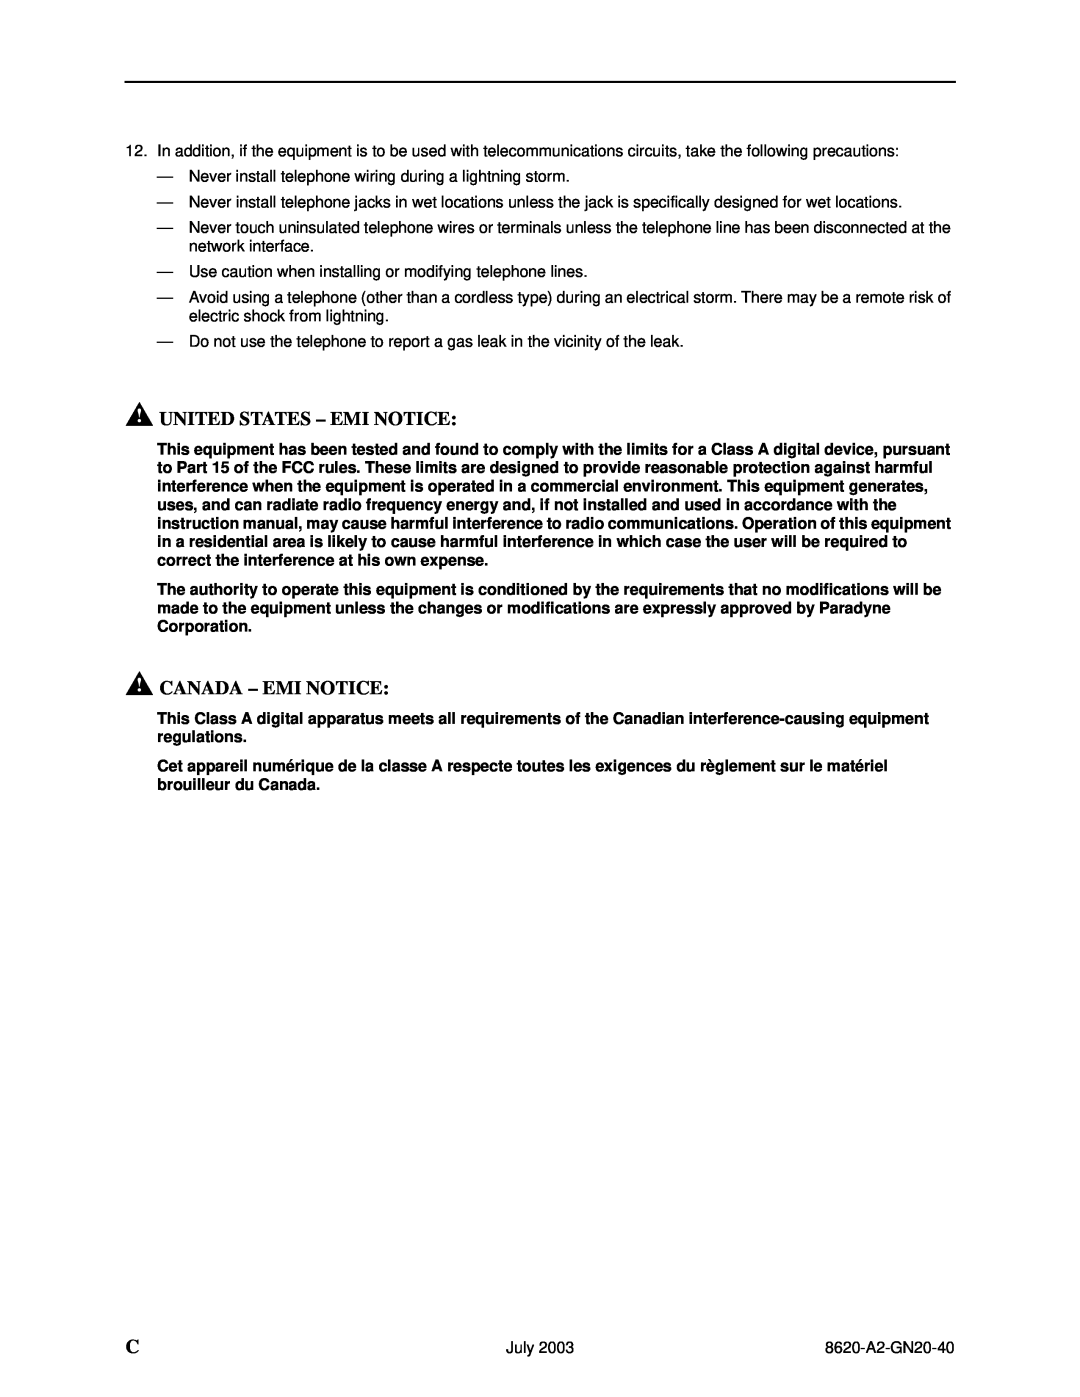 Paradyne Hotwire 8620 GranDSLAM Installation Guide manual United States - Emi Notice, Canada - Emi Notice 